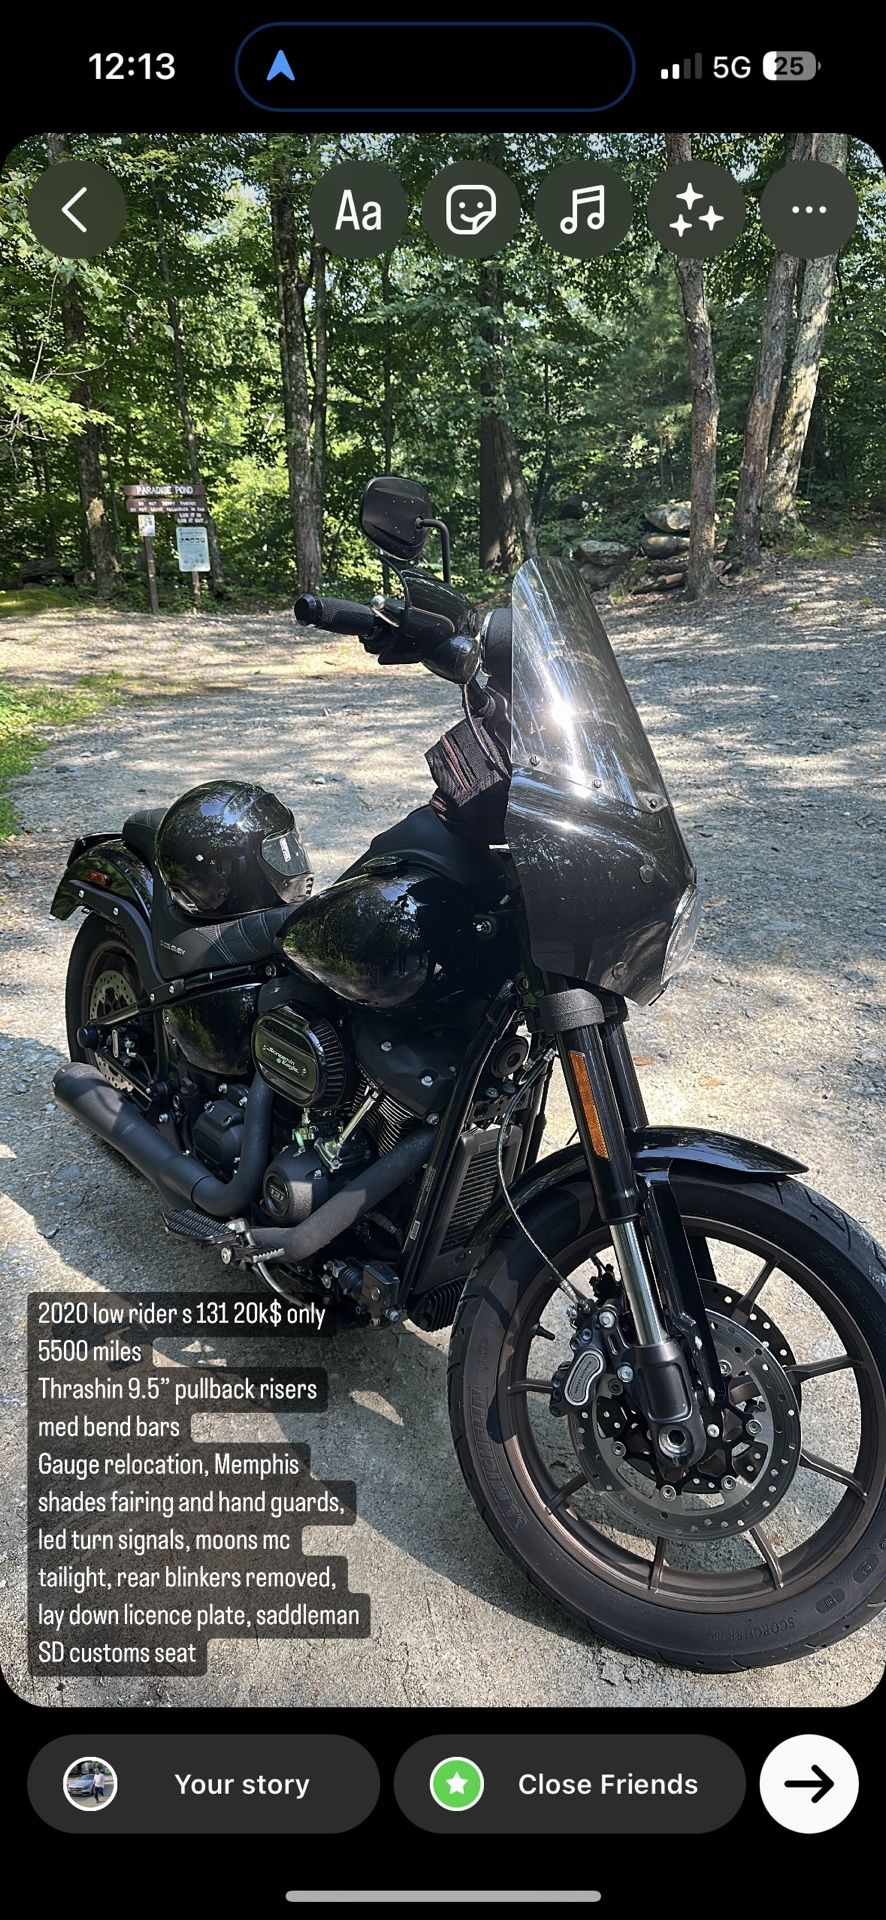 2020 Harley Davidson Low rider S